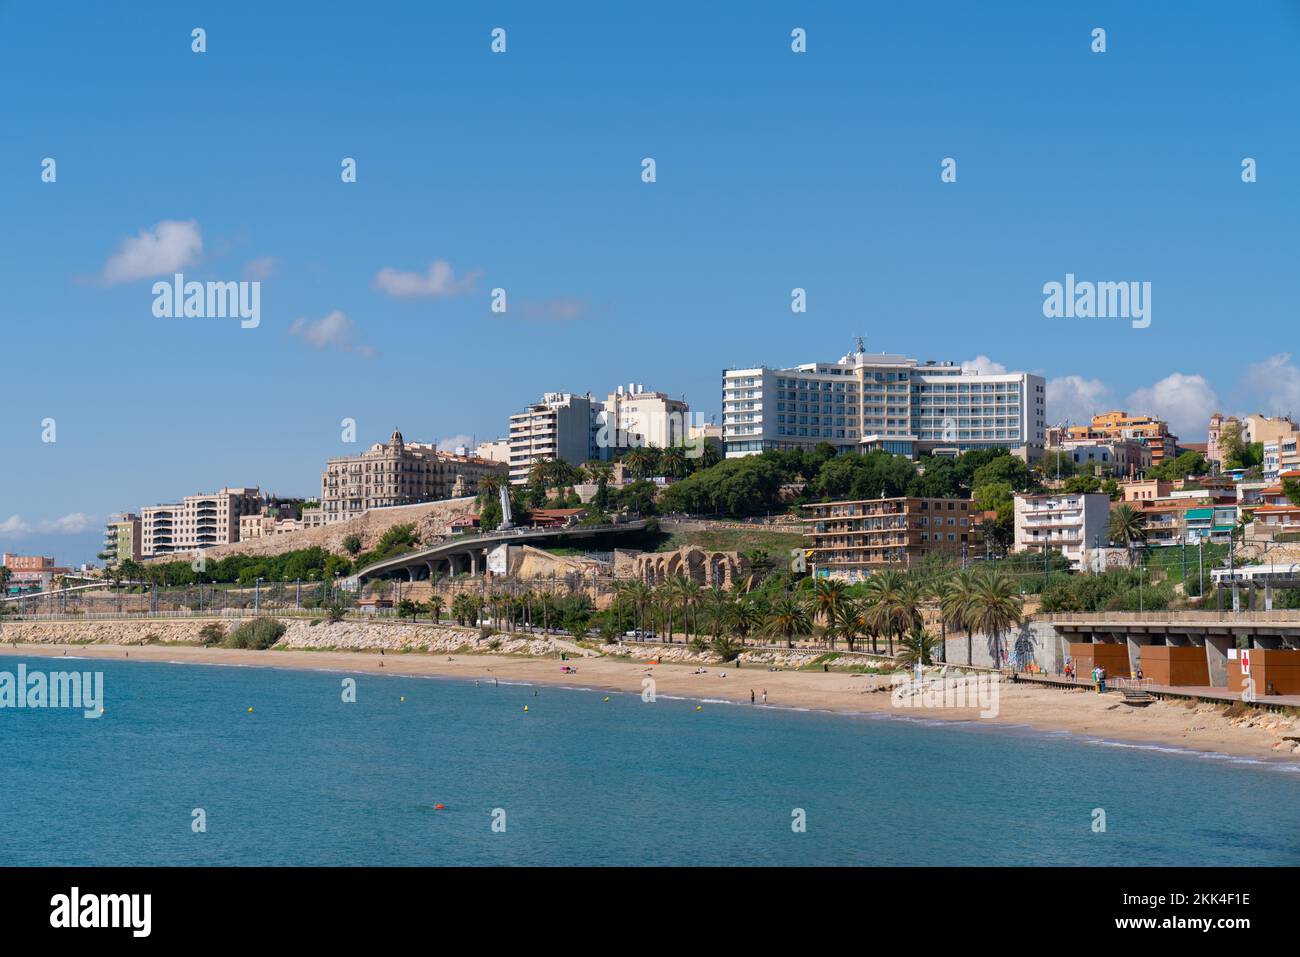 Tarragona Spain spanish city on the coast with blue Mediterranean sea Stock Photo